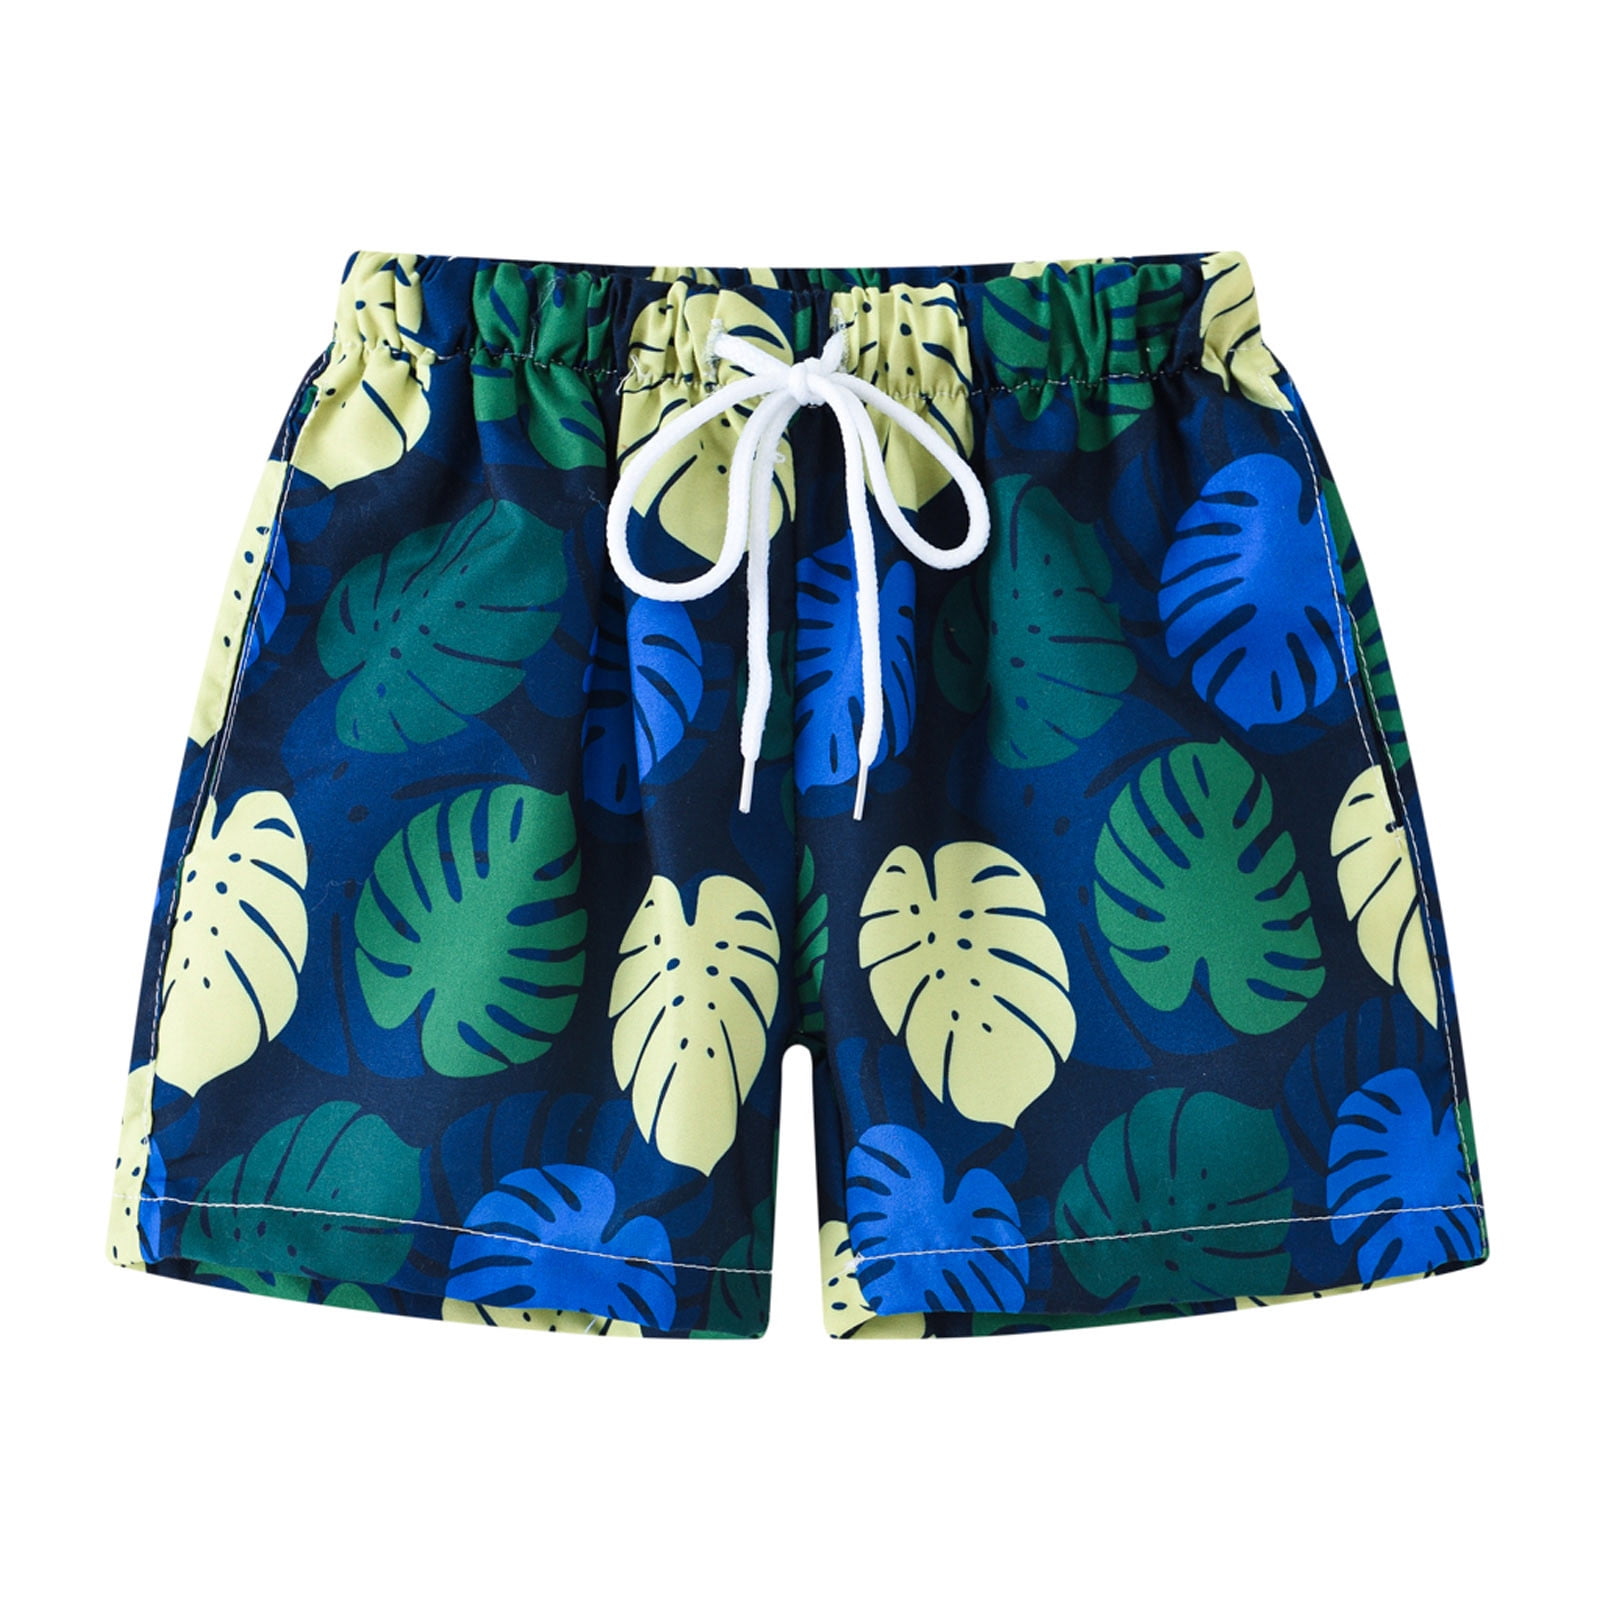 Mens Bear Baby Pattern Shorts Lightweight Swim Trunks Beach Shorts,Boardshort